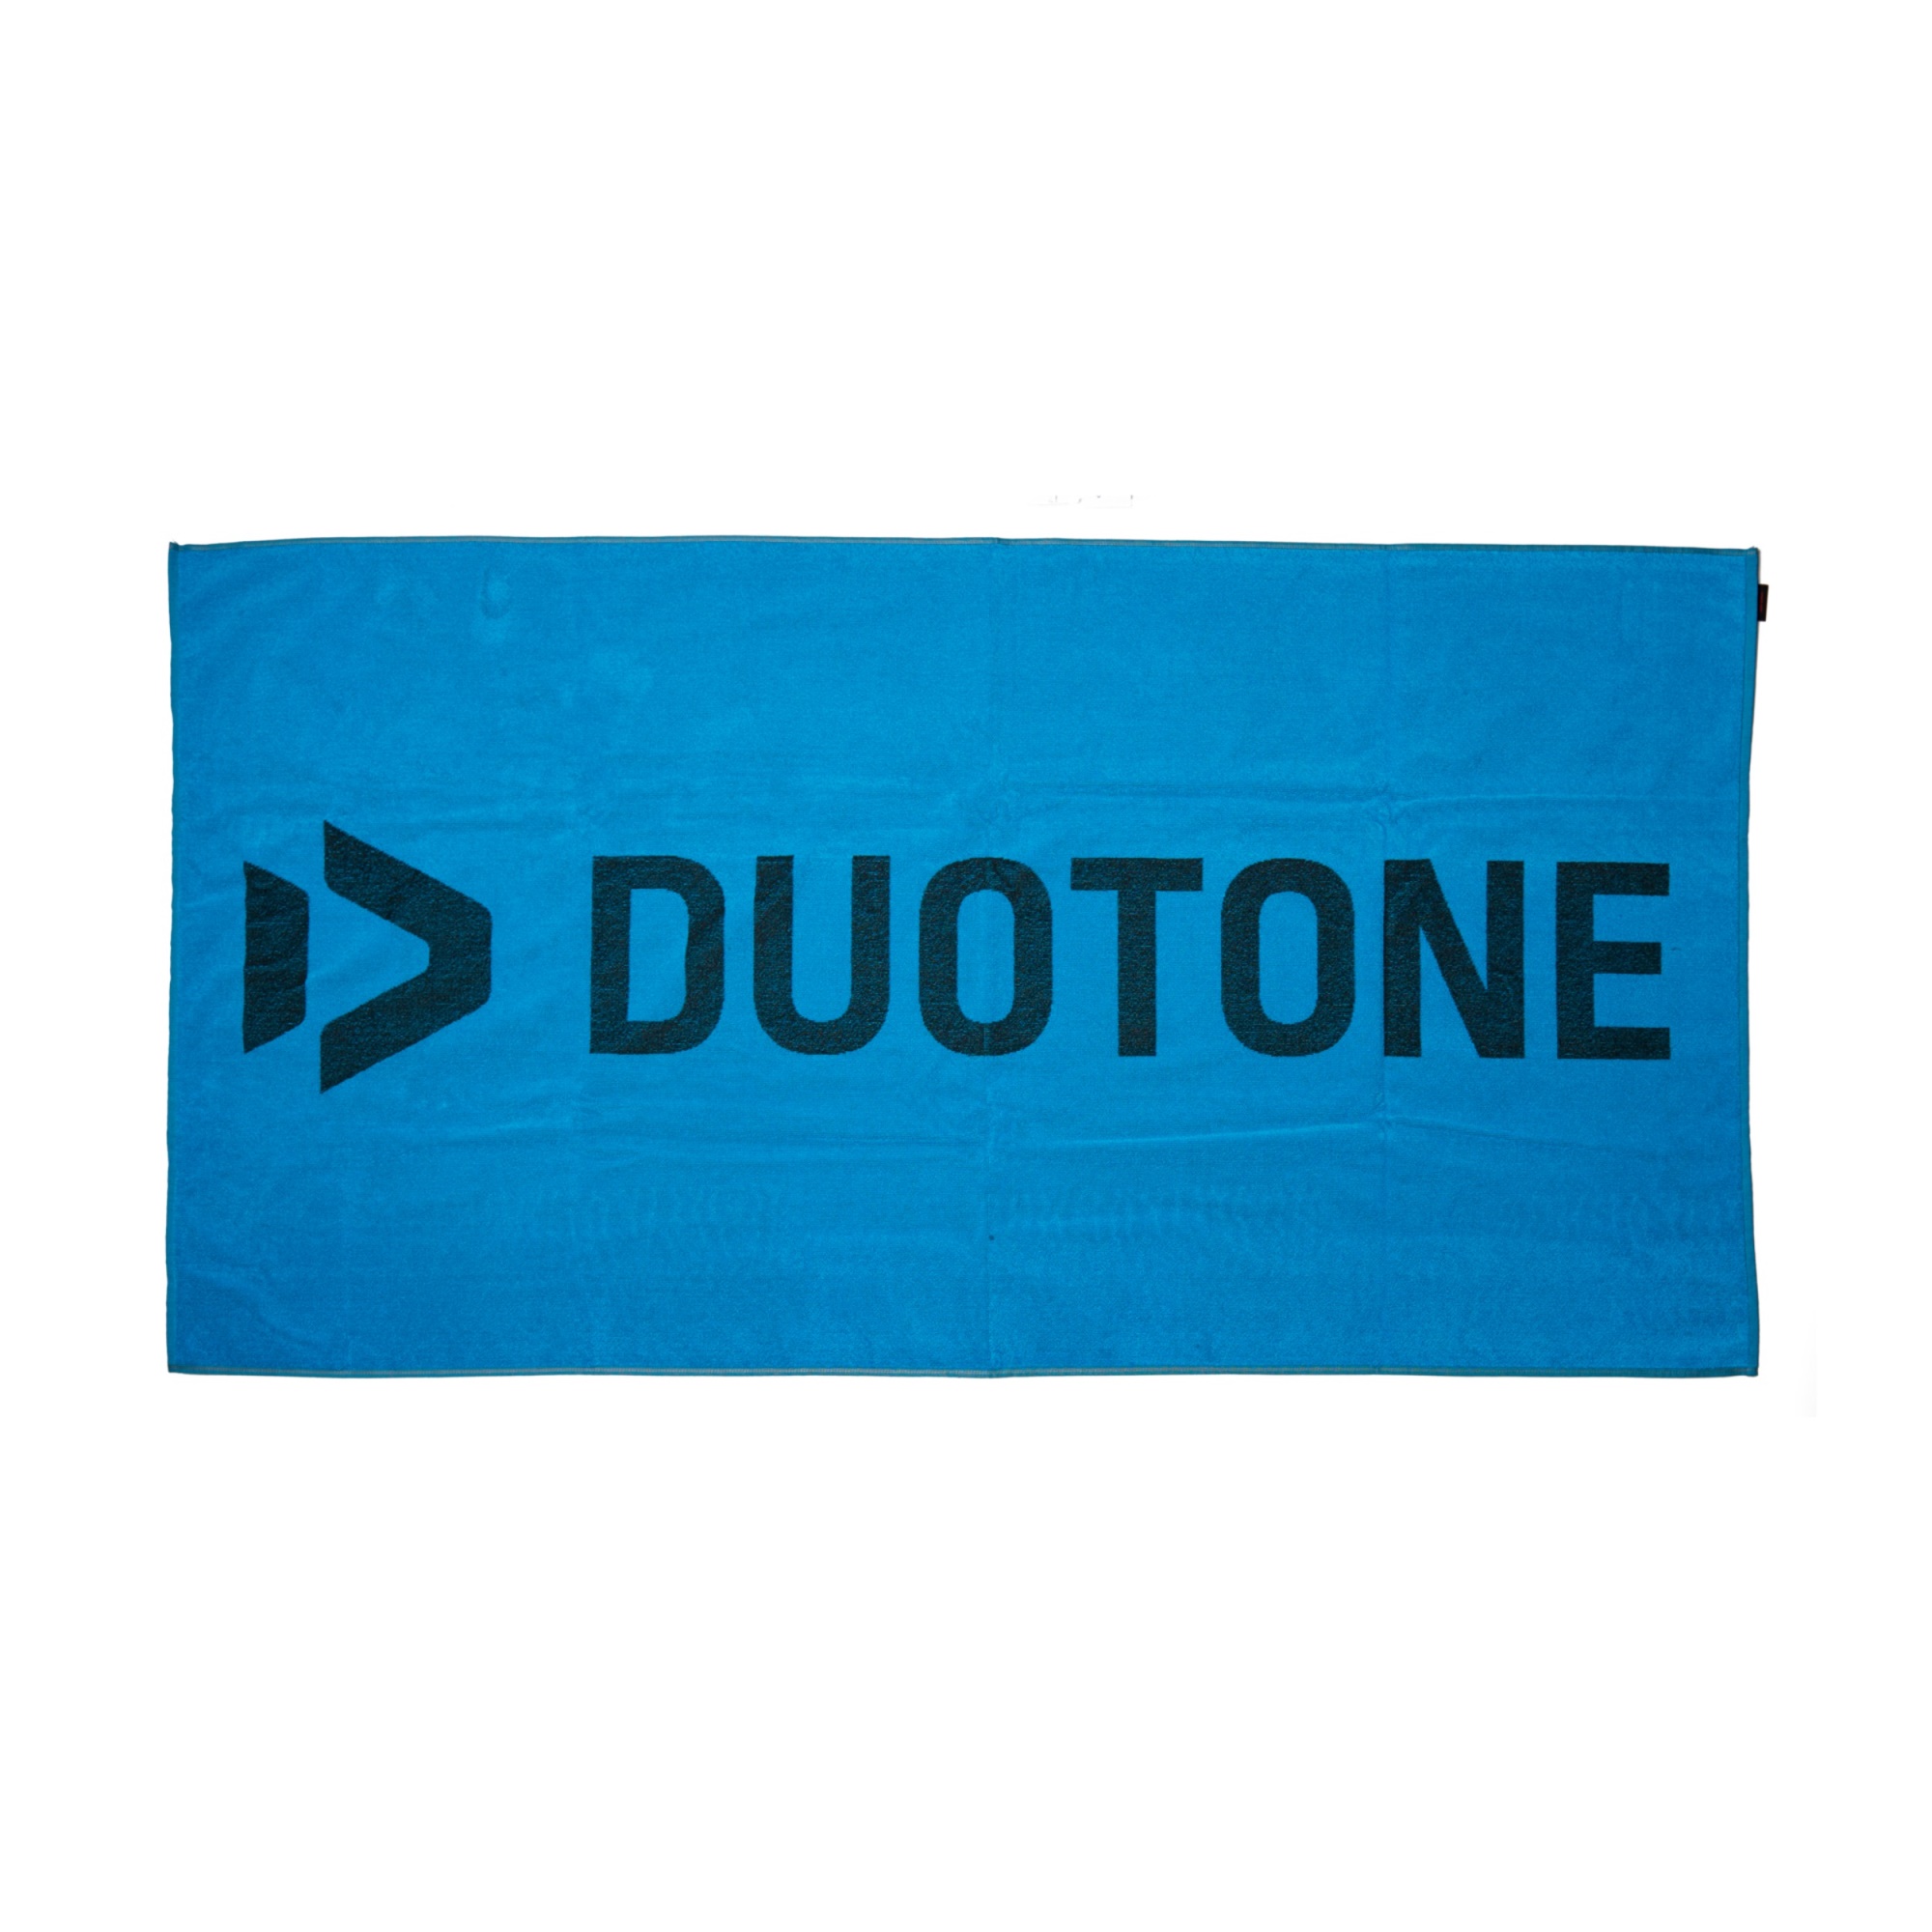 Handtuch Duotone / Beach Towel 1700 cm mal 900 cm / petrol